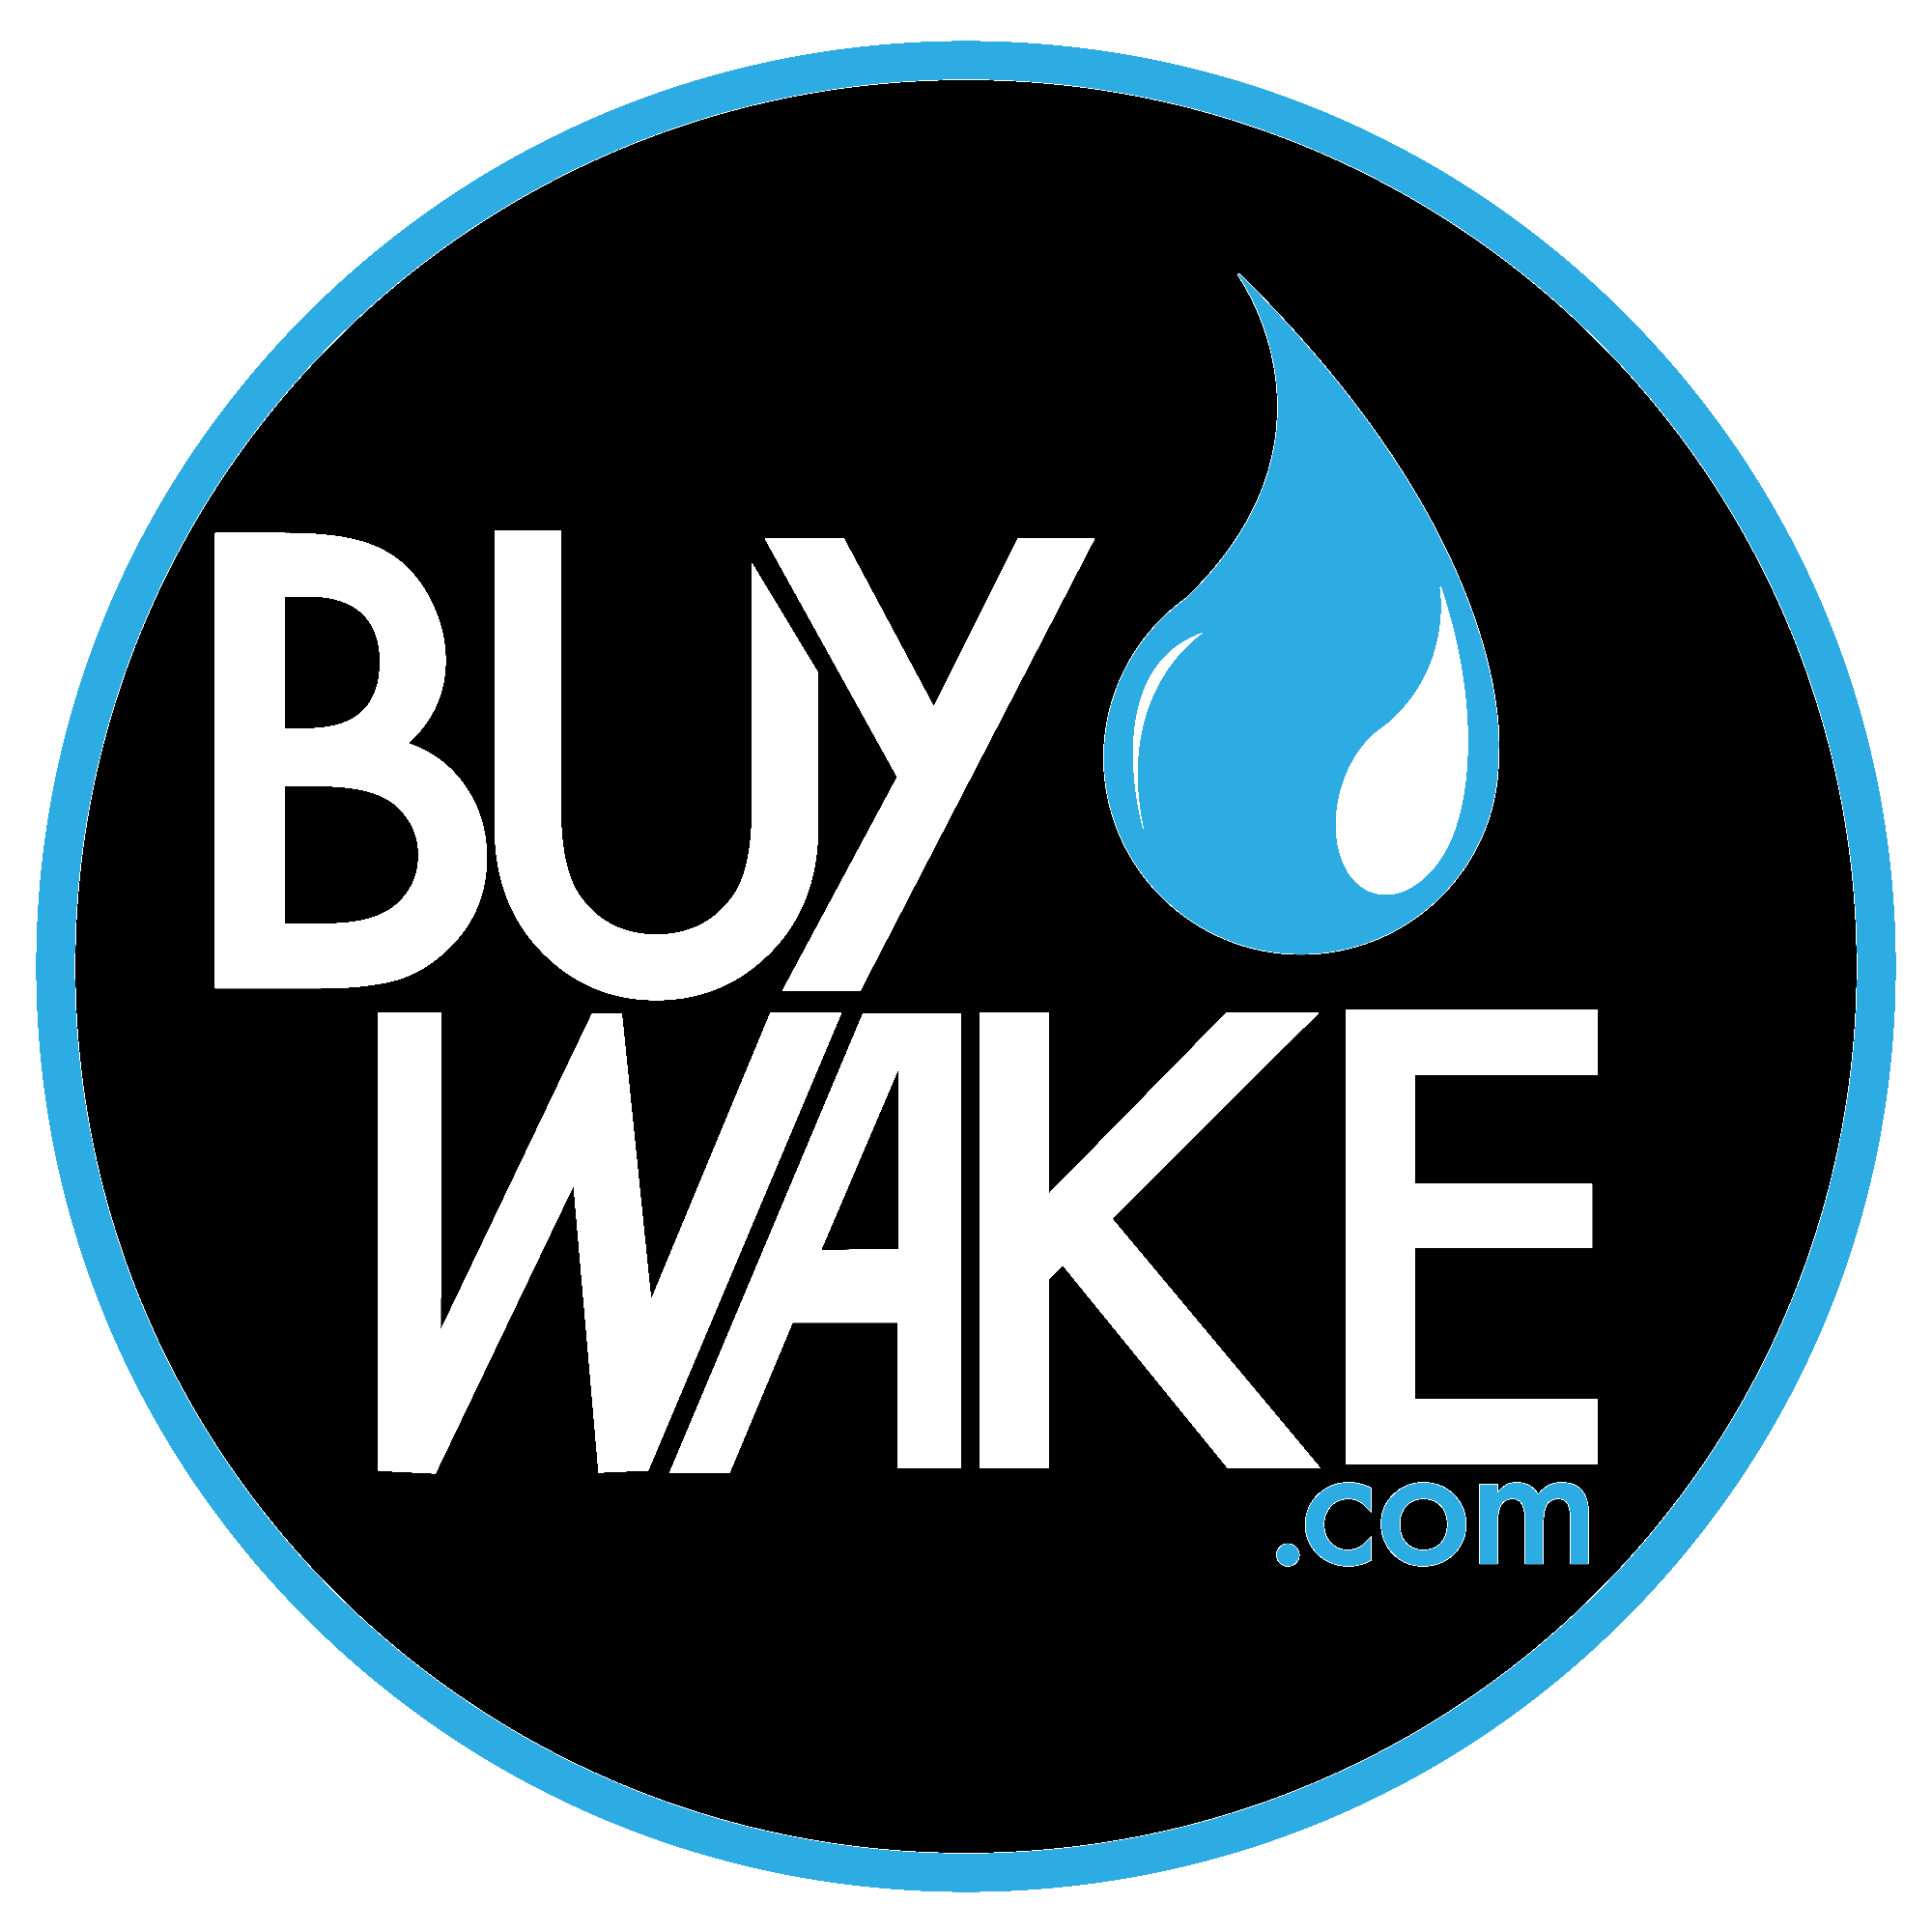 Wakeboard Logo - BuyWake.com - The Original Online Wakeboard Shop